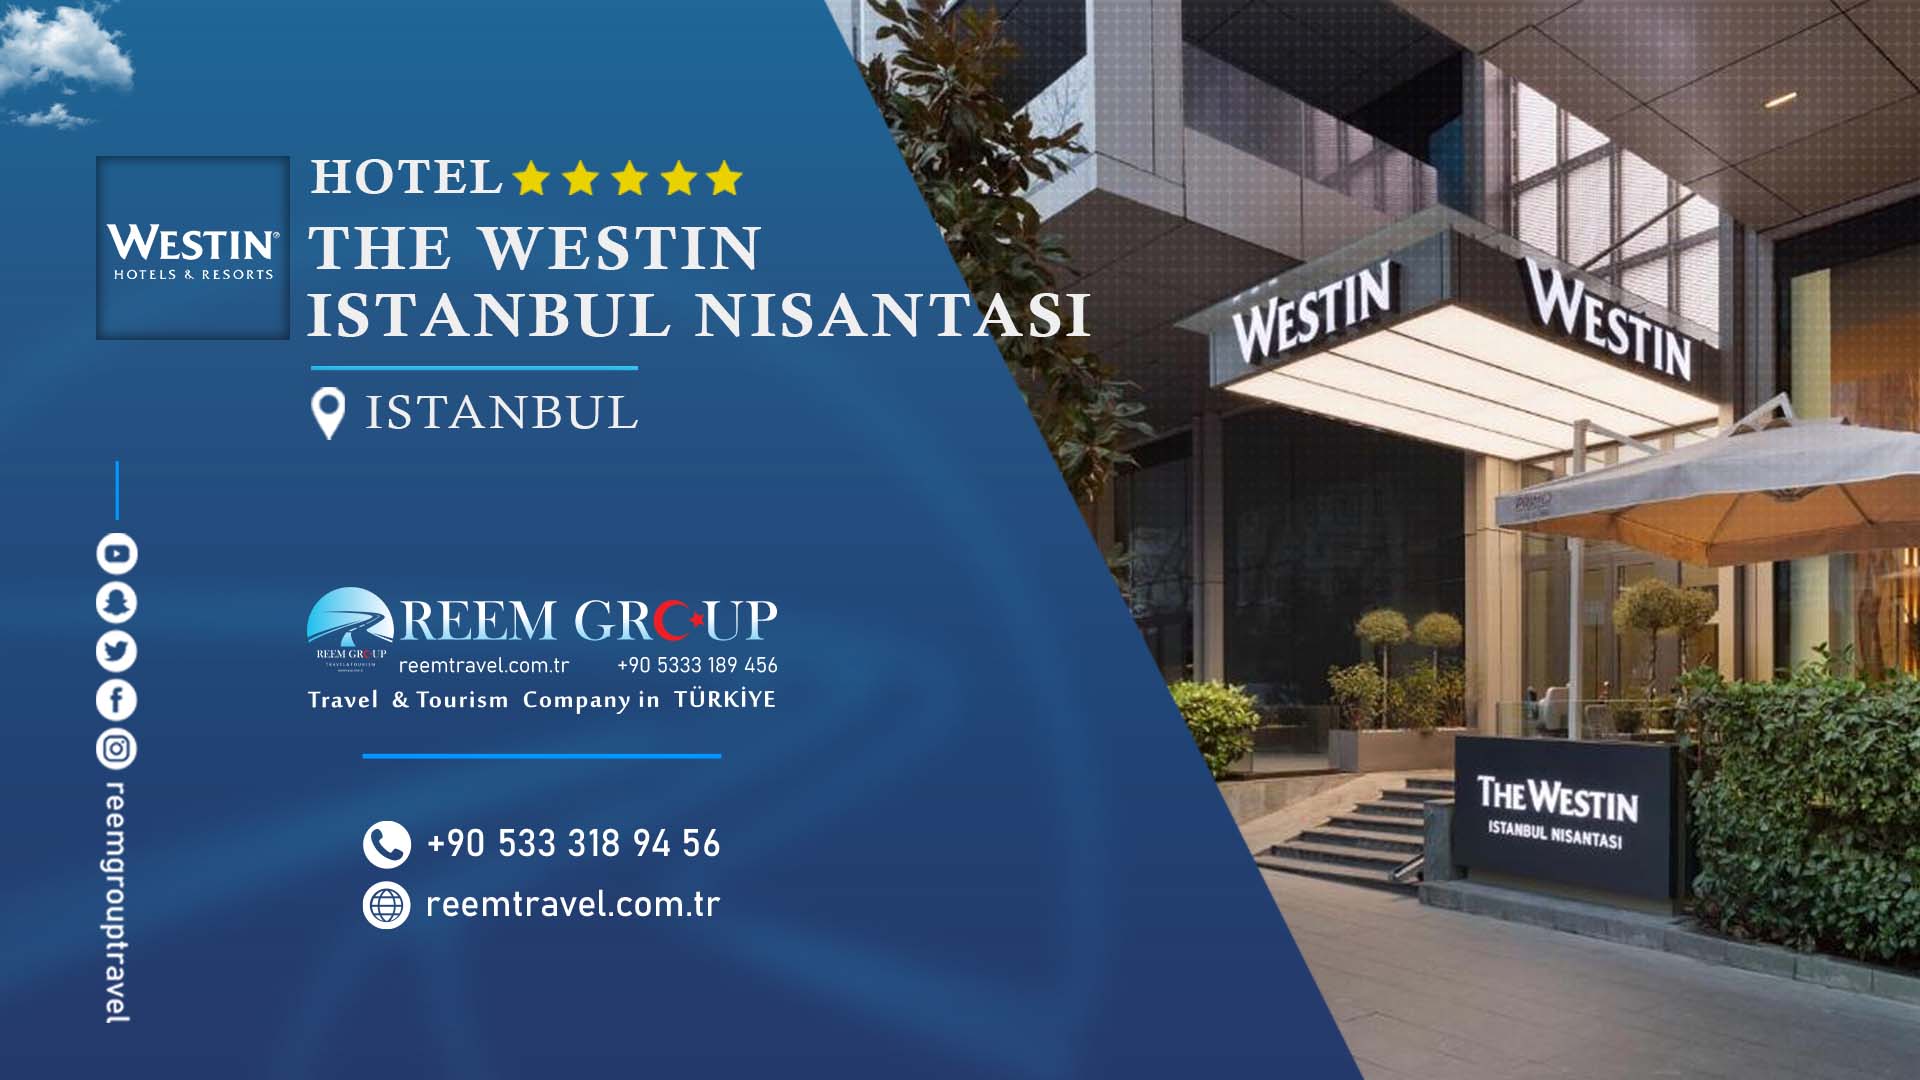 The Westin Istanbul Nisantasi 